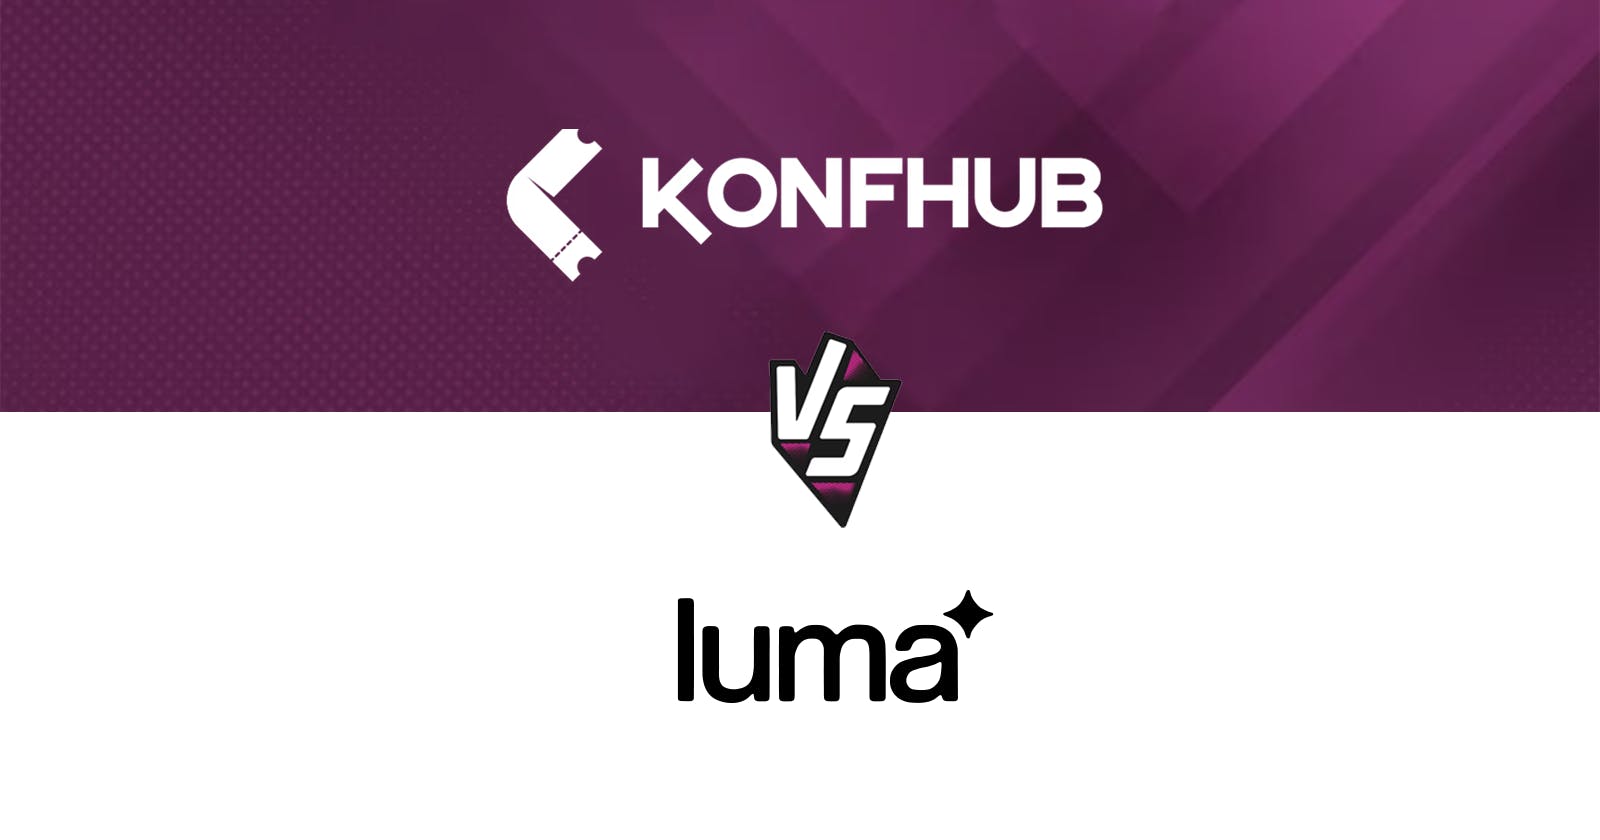 KonfHub: A Cost-Effective & Engaging Alternative To Luma